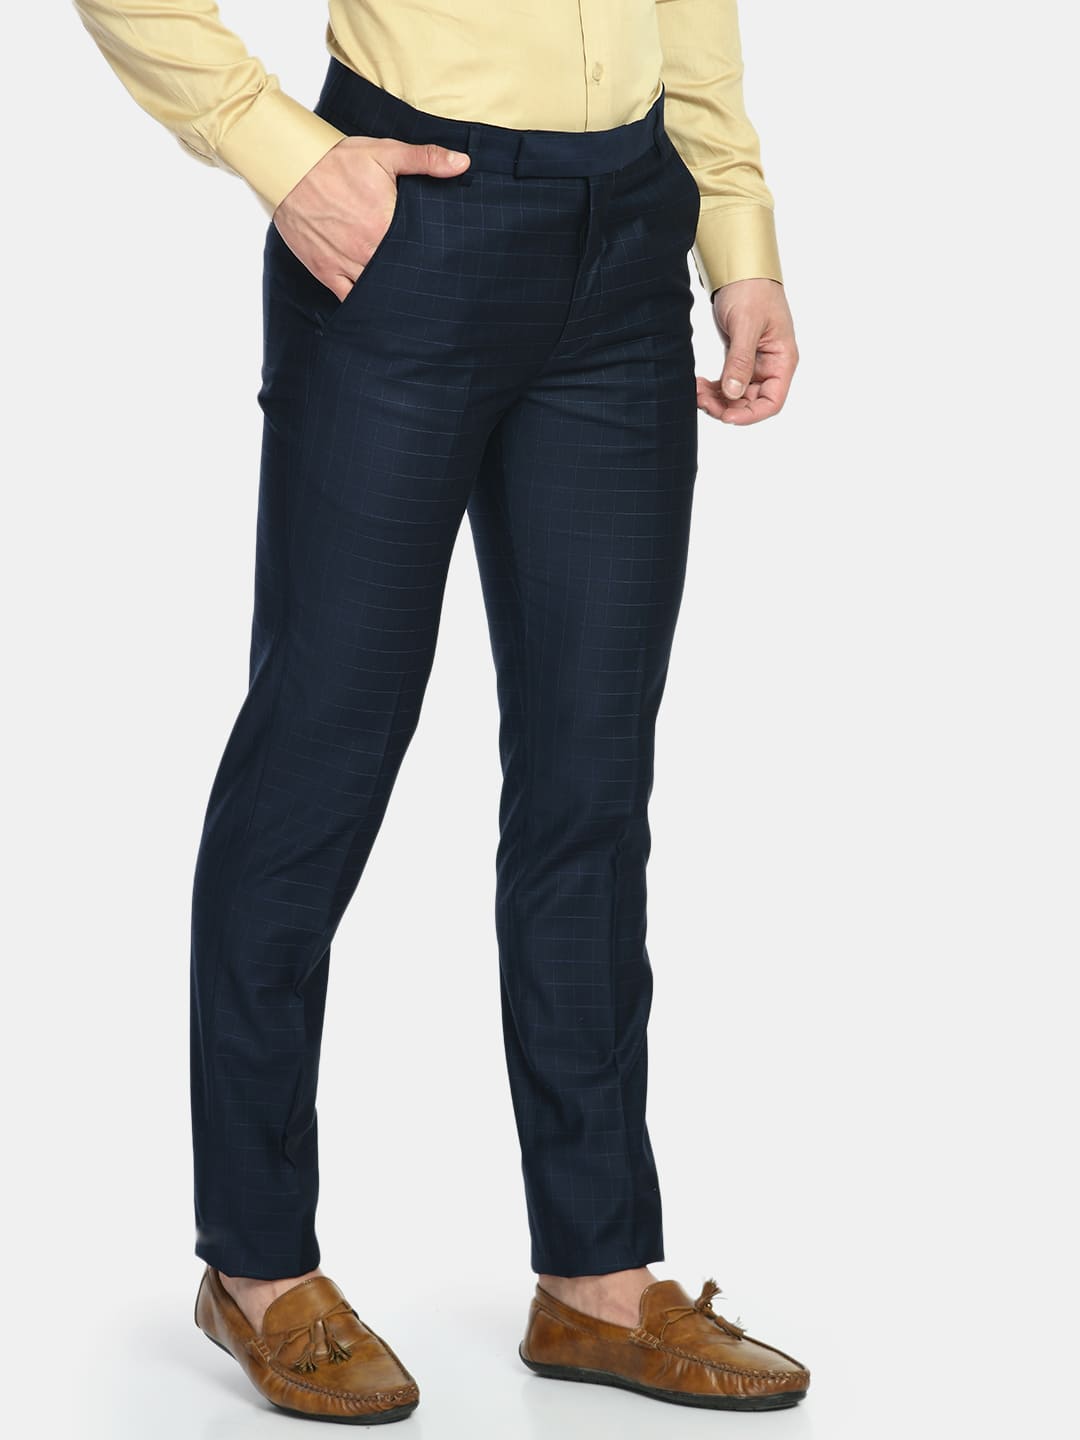 Buy Men Grey Solid Slim Fit Formal Trousers Online - 707664 | Peter England